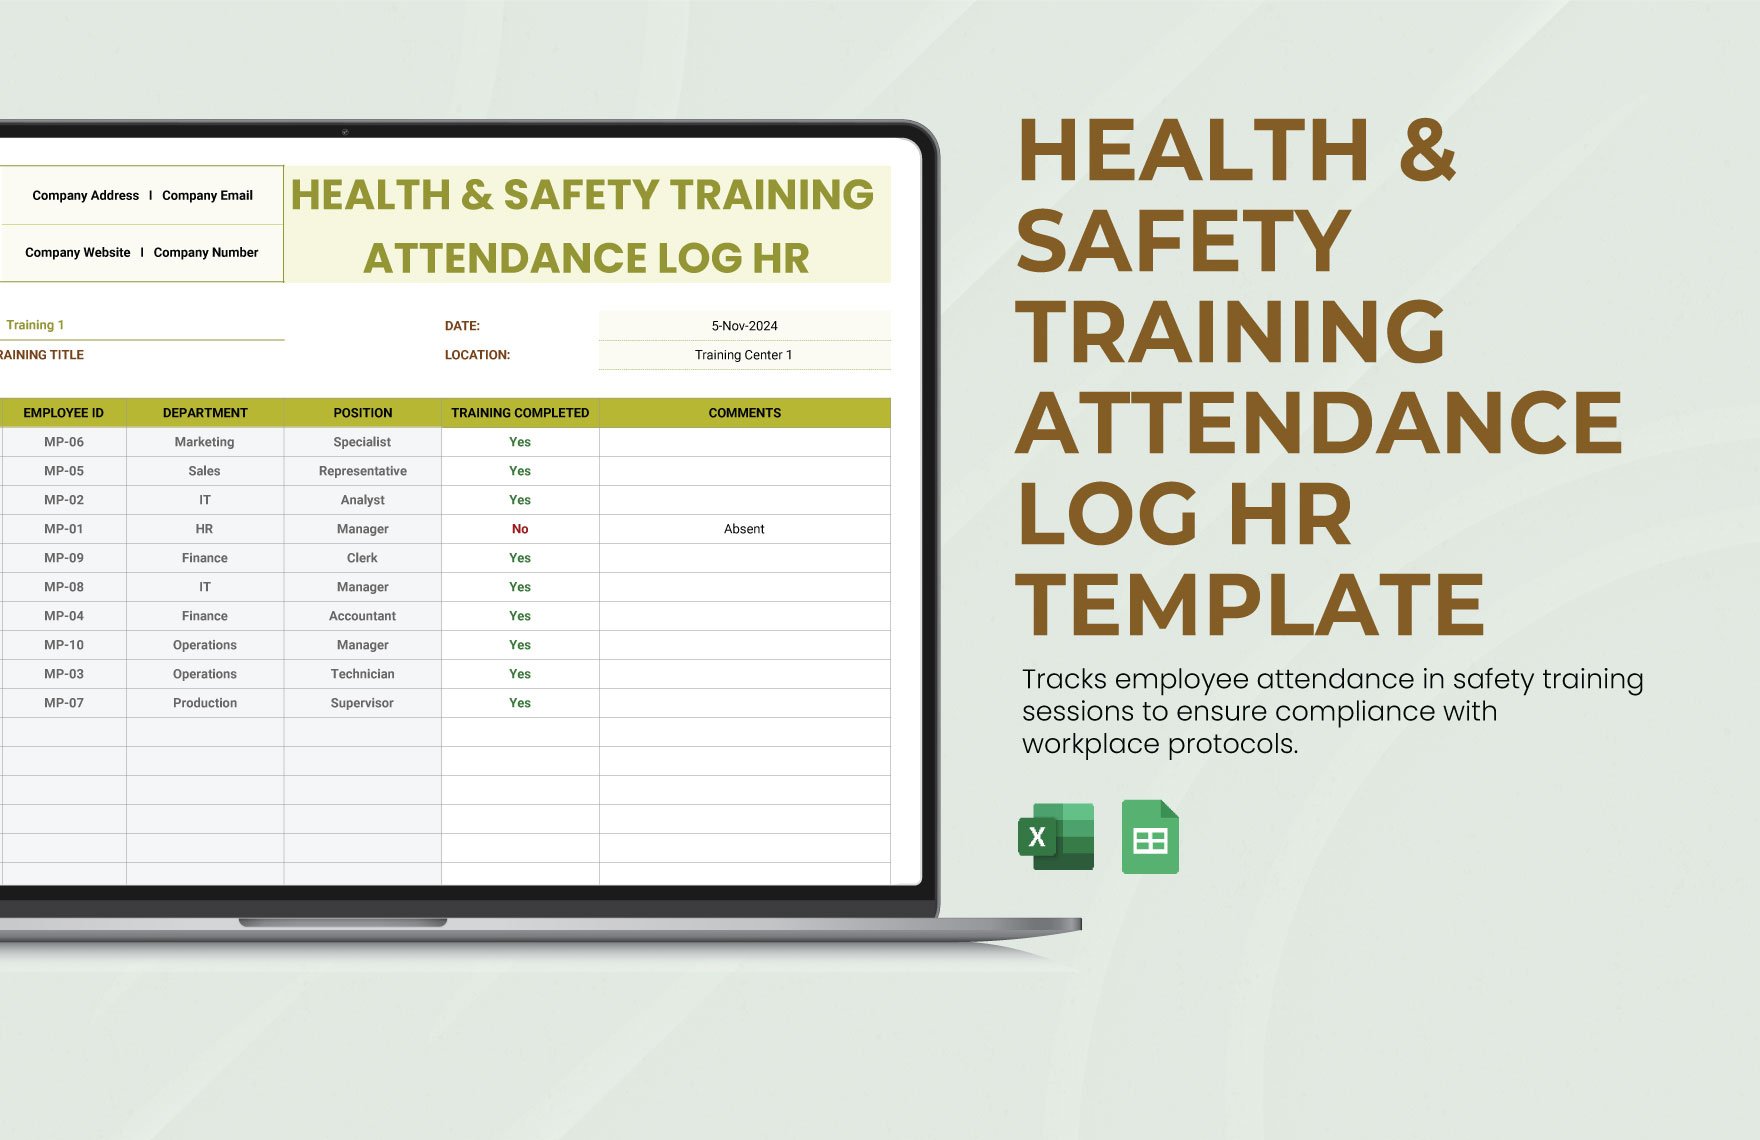 Health & Safety Training Attendance Log HR Template